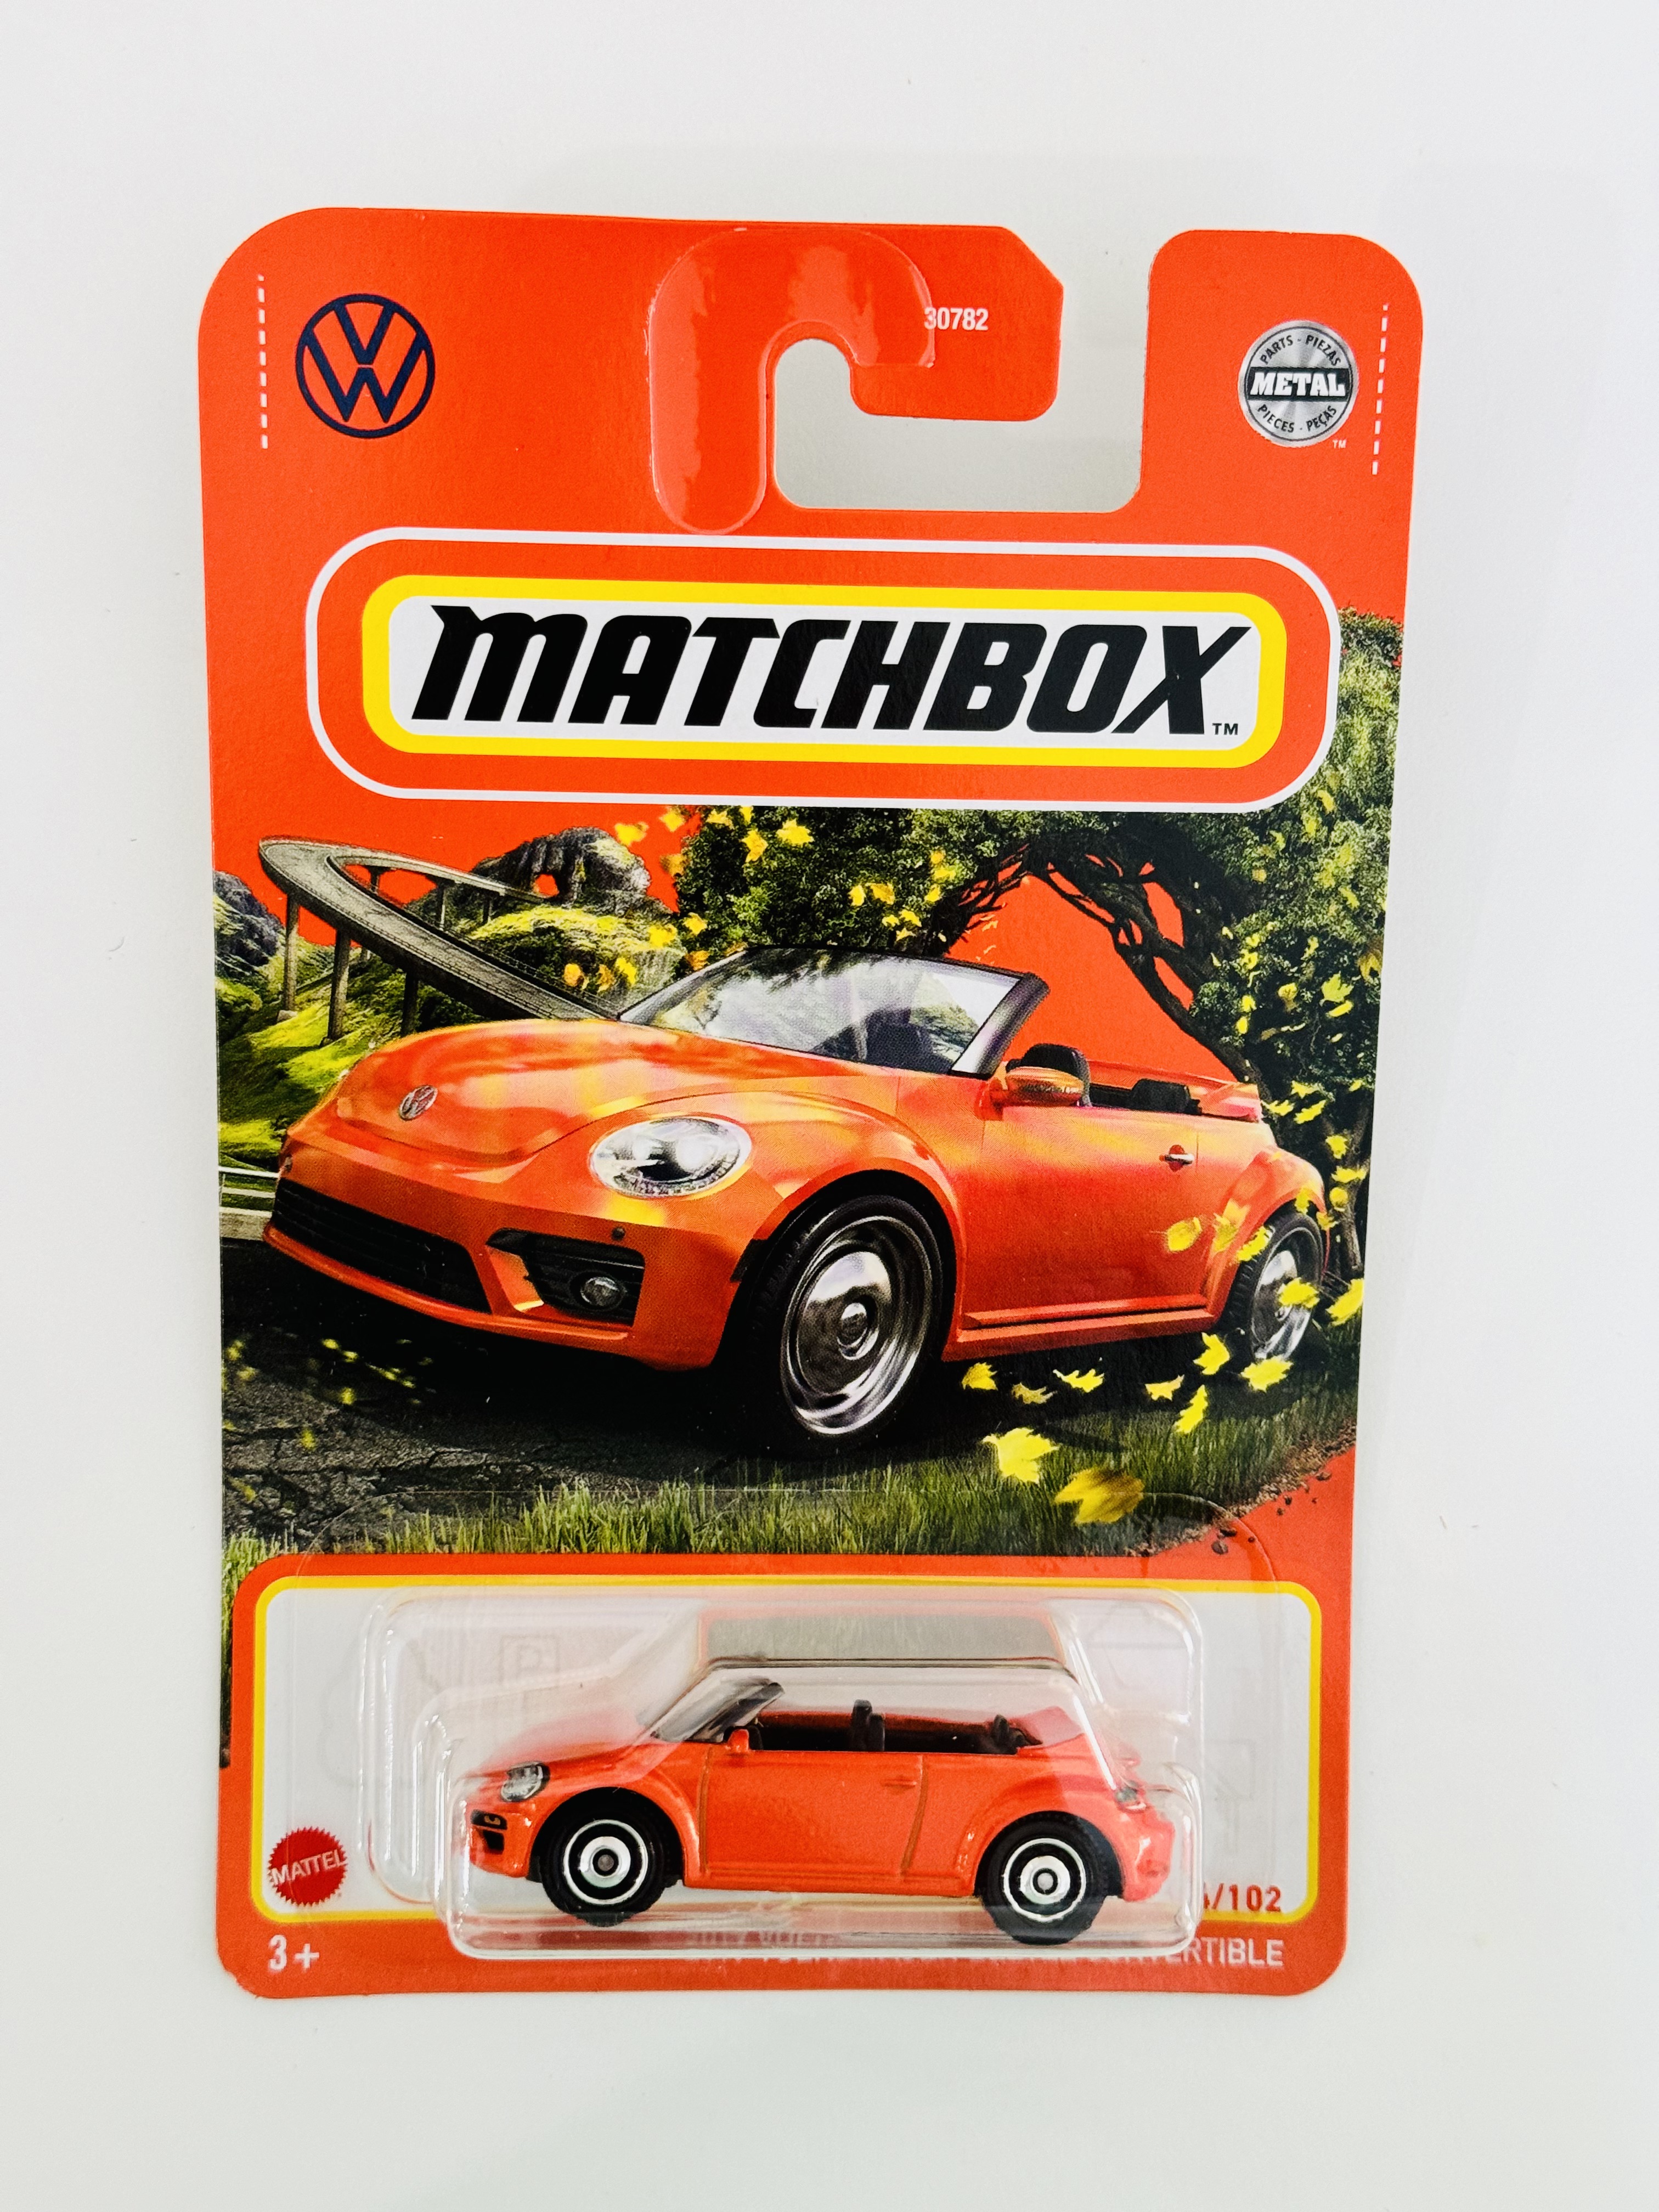 Matchbox #14 2019 Volkswagen Convertible